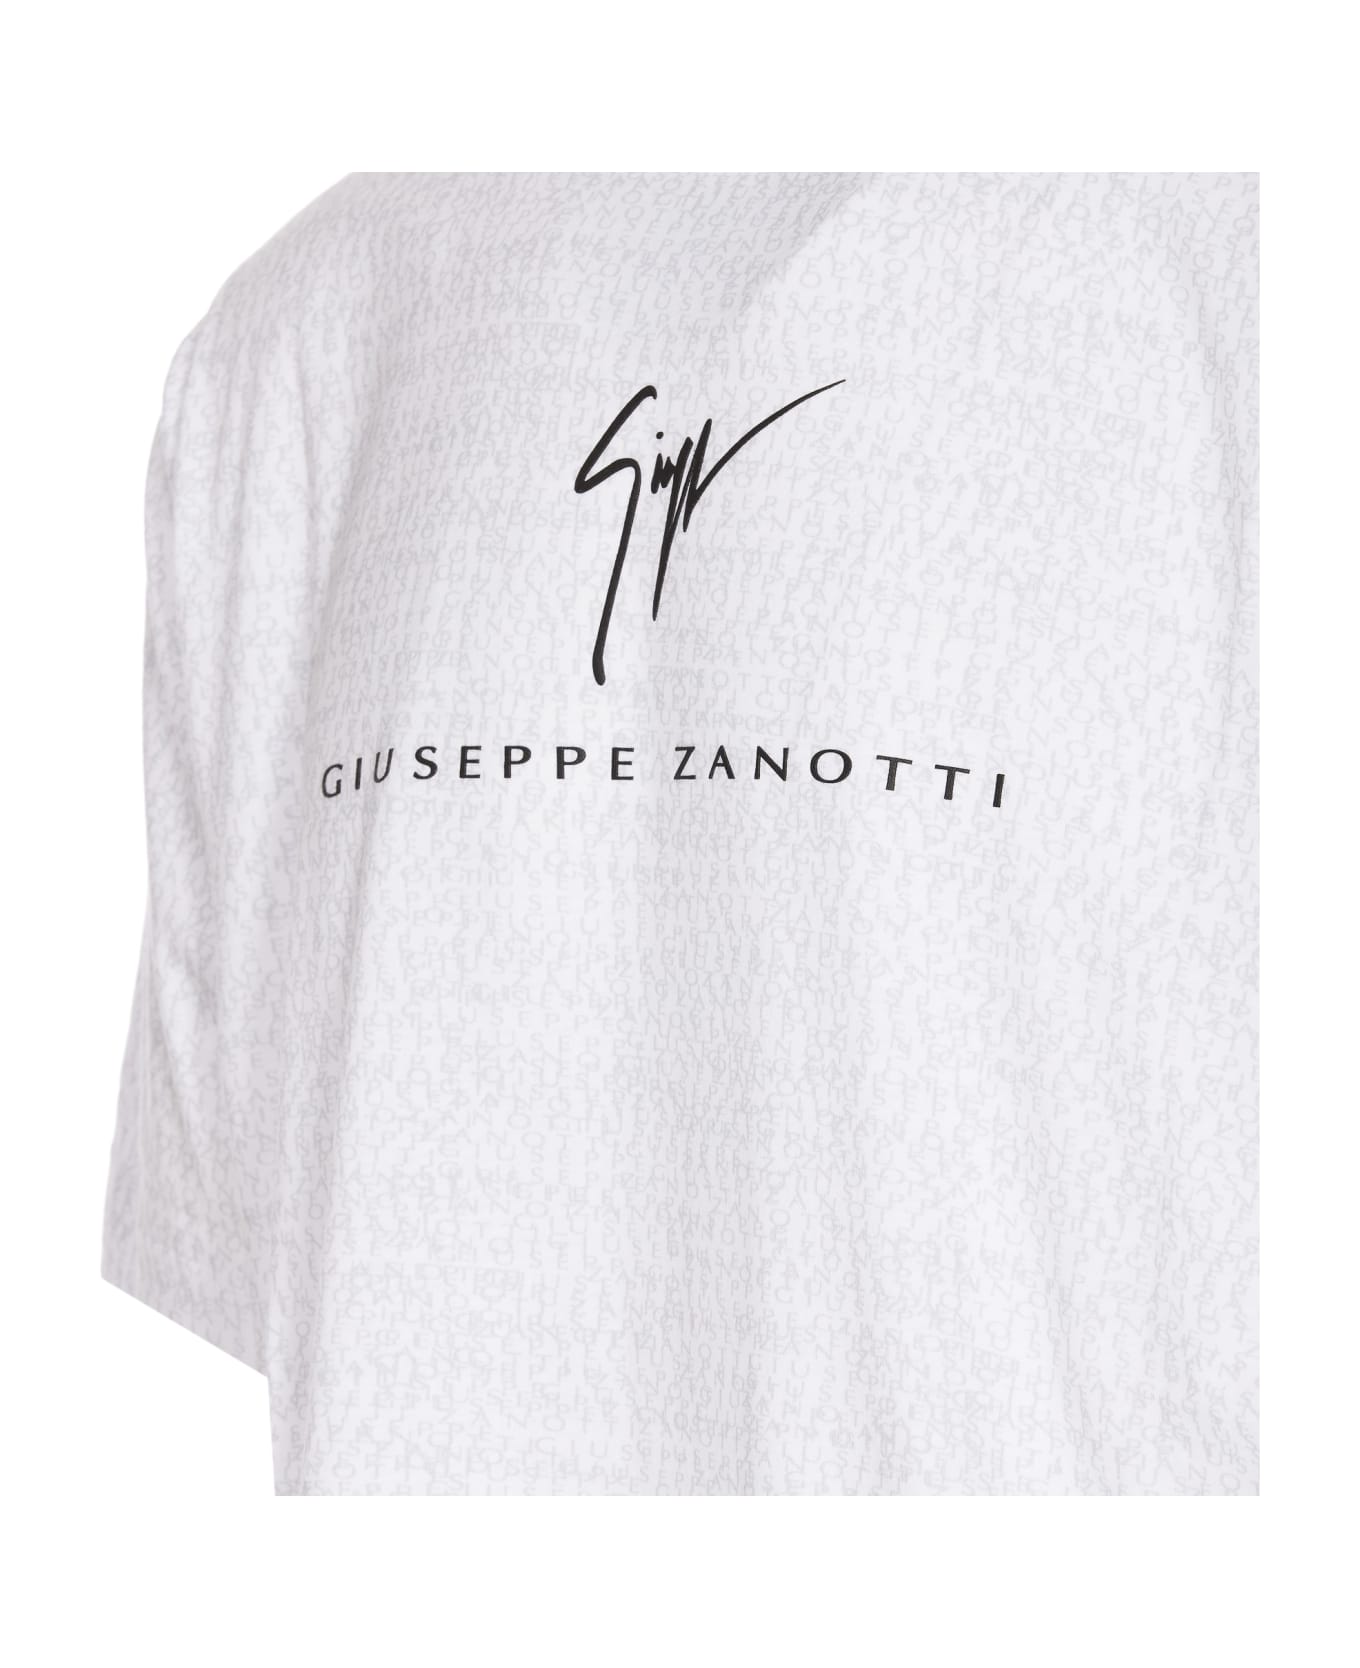 Giuseppe Zanotti Lr-56 Logo T-shirt - White